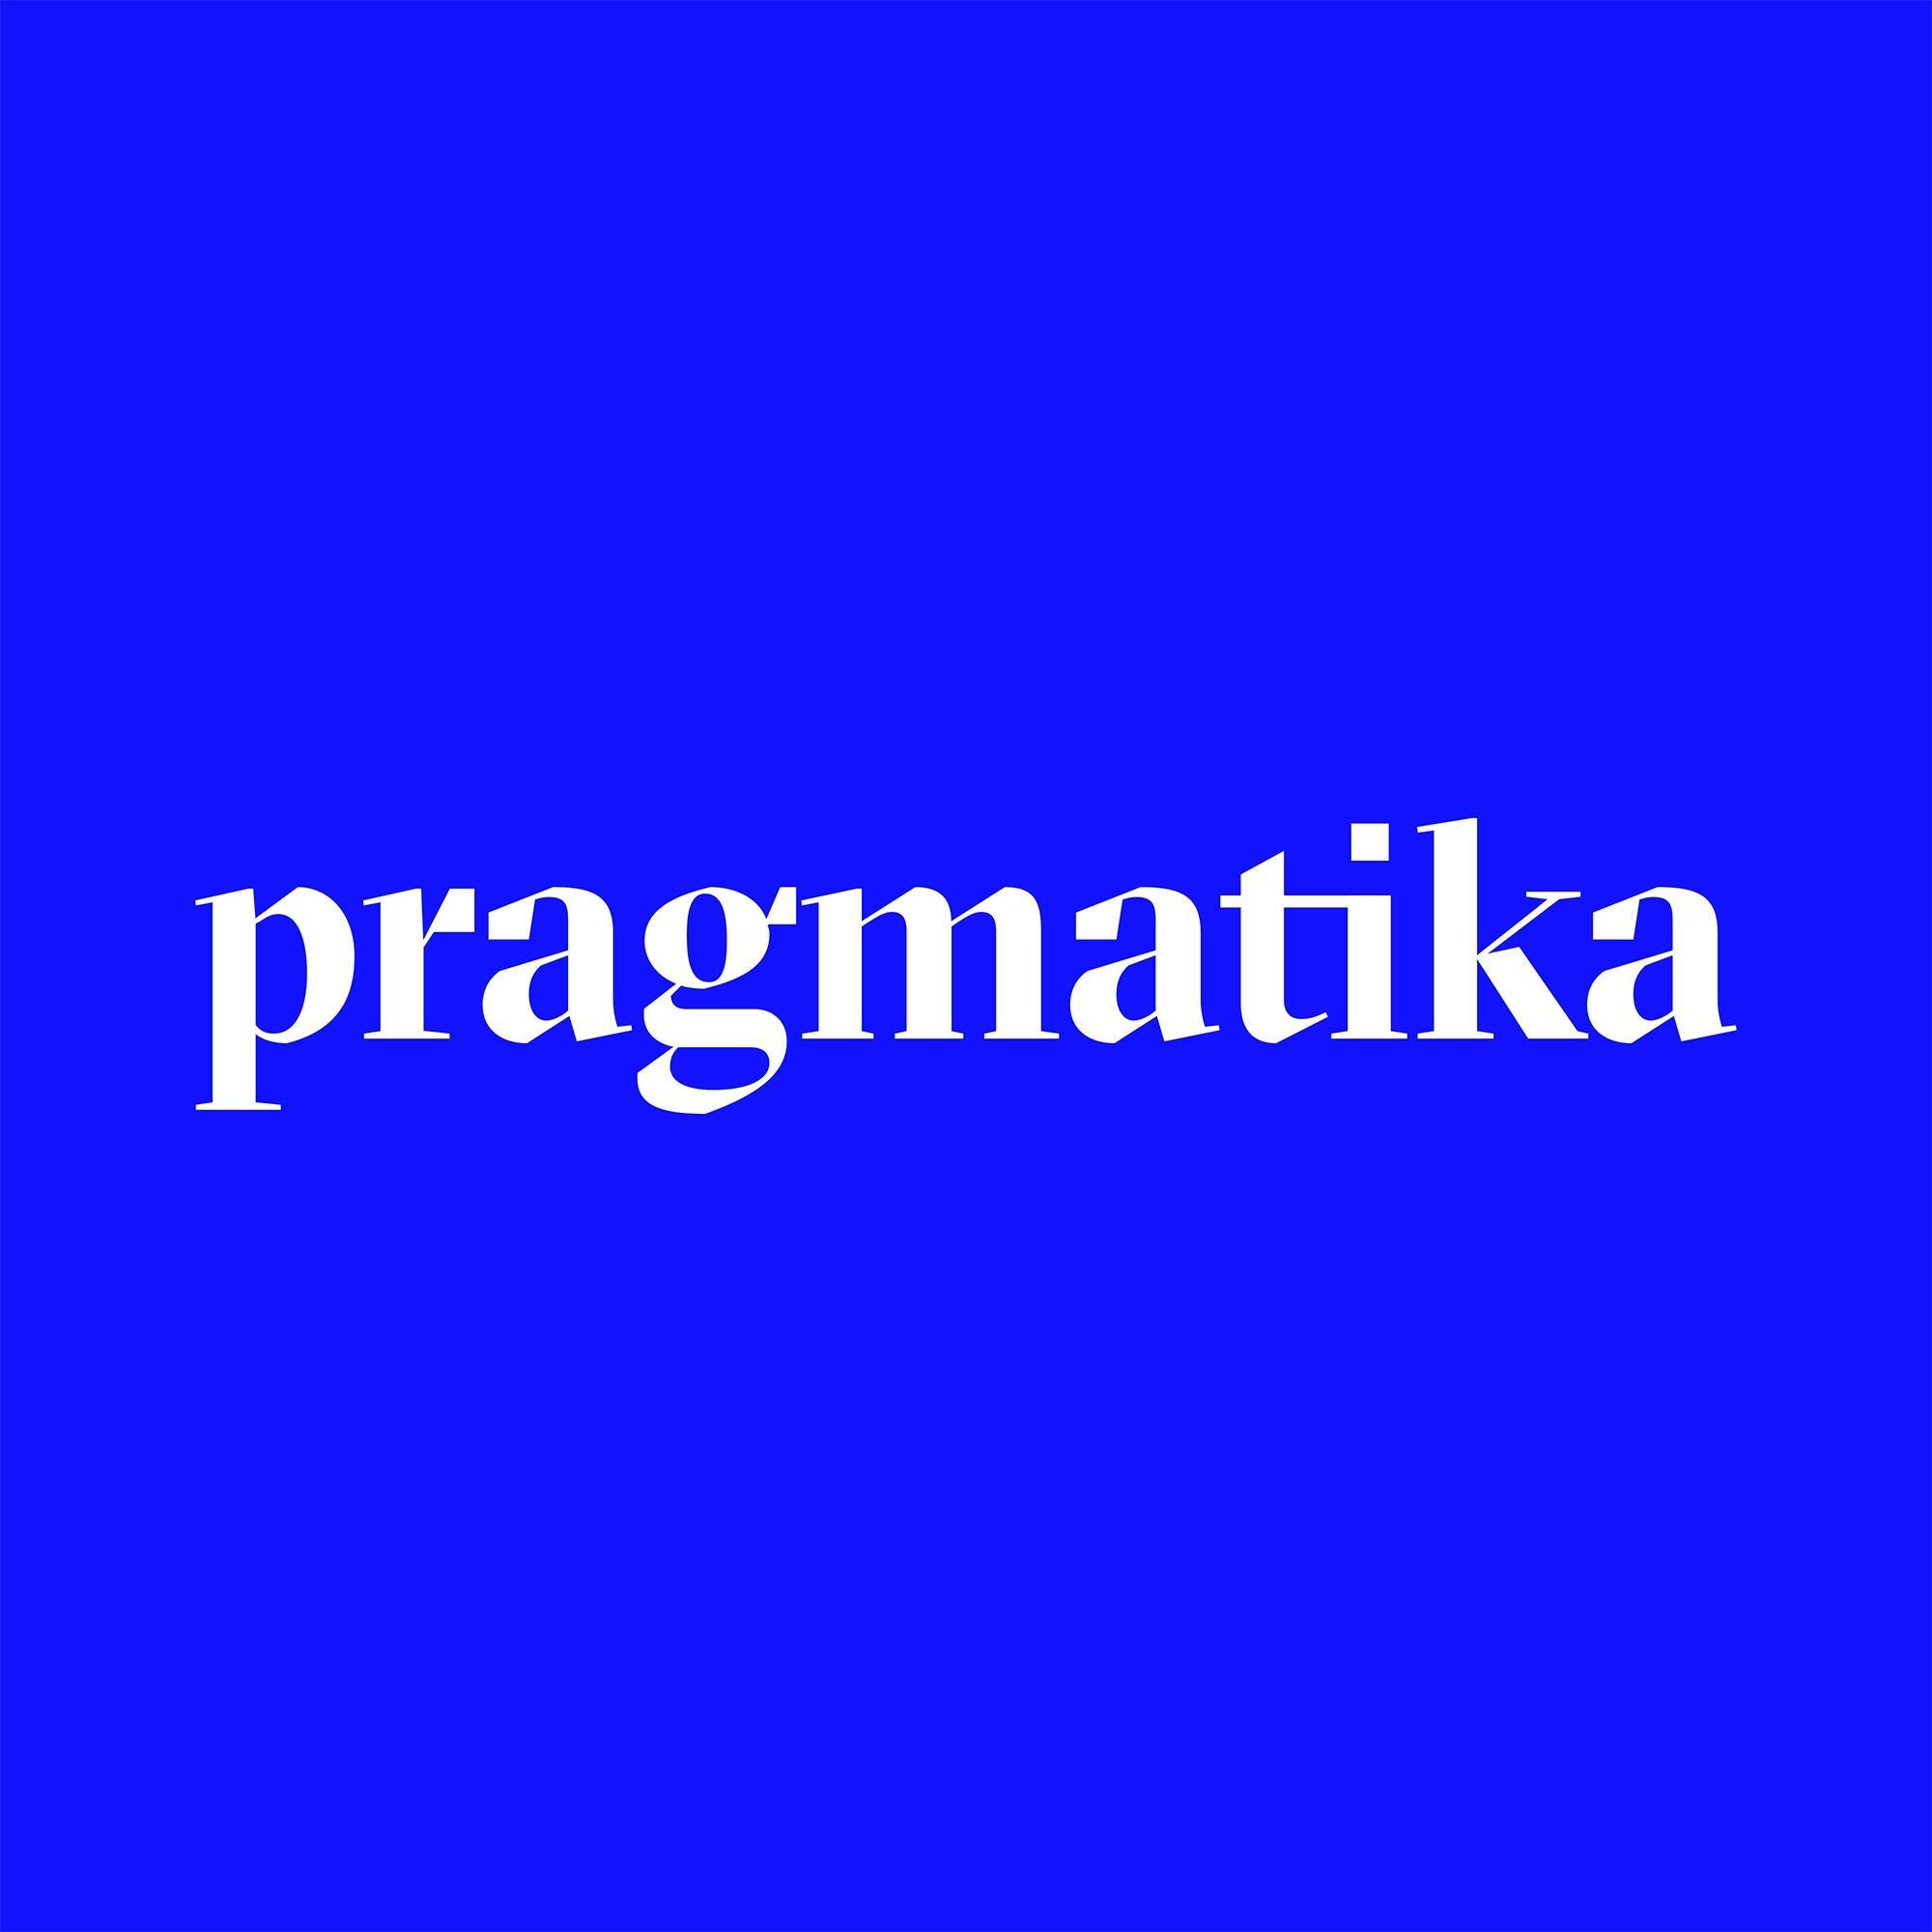 Pragmatika on LogoLounge